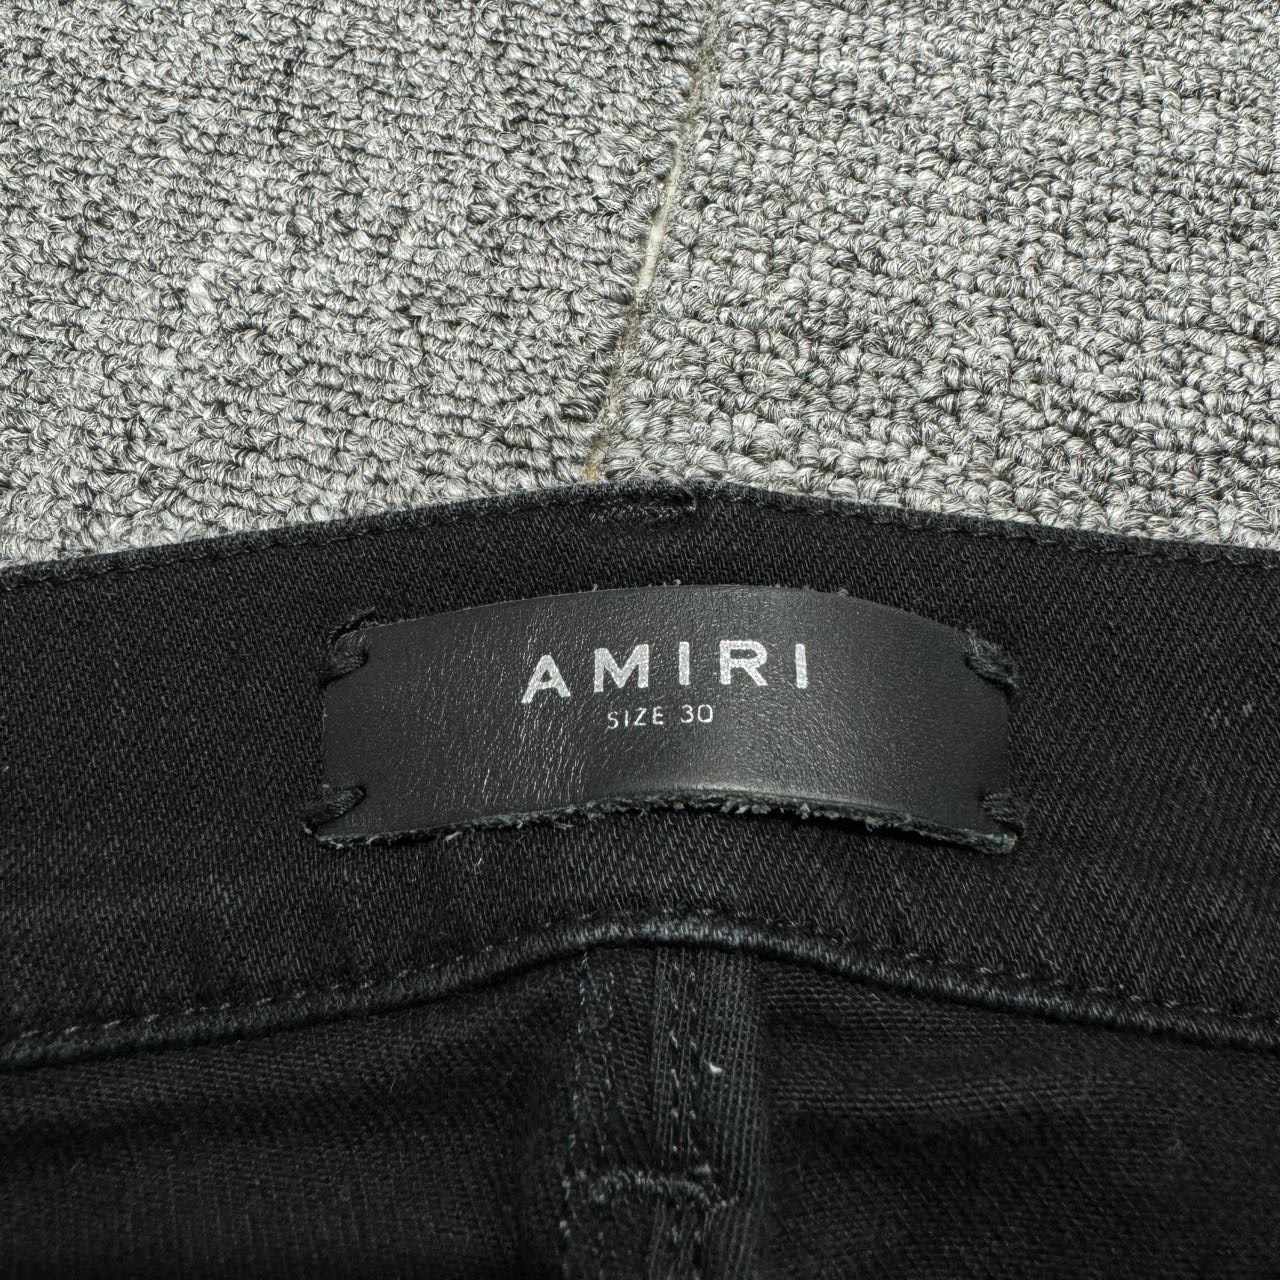 Amiri Black Large Distressed Denim Jeans - 3